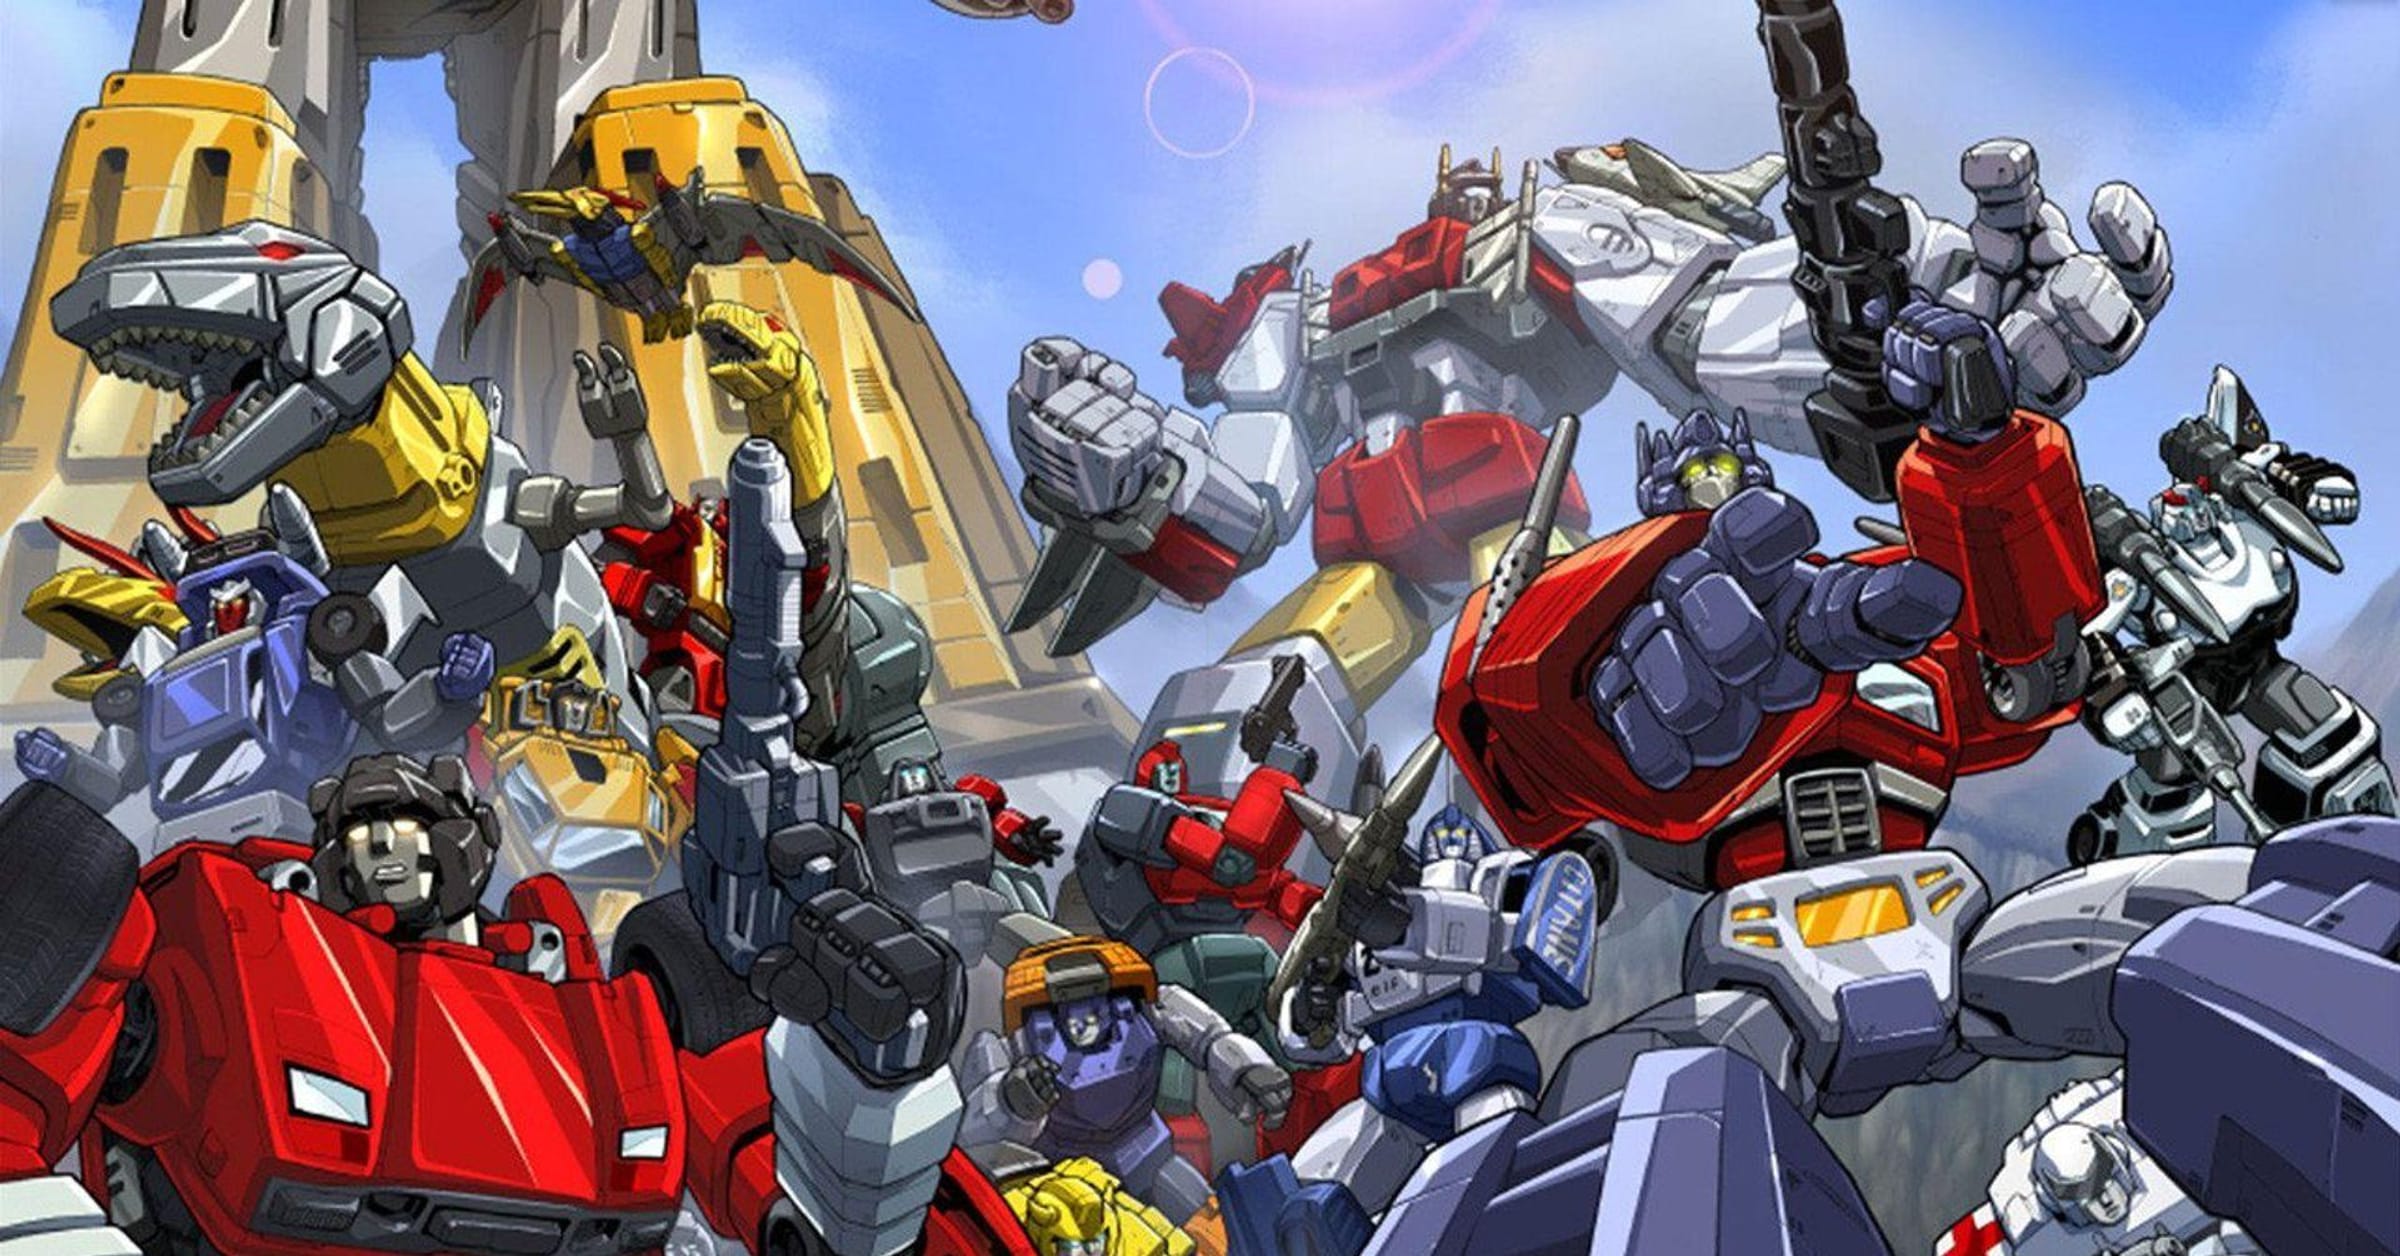 Transformers Prime: Season 3 Trailer #2 